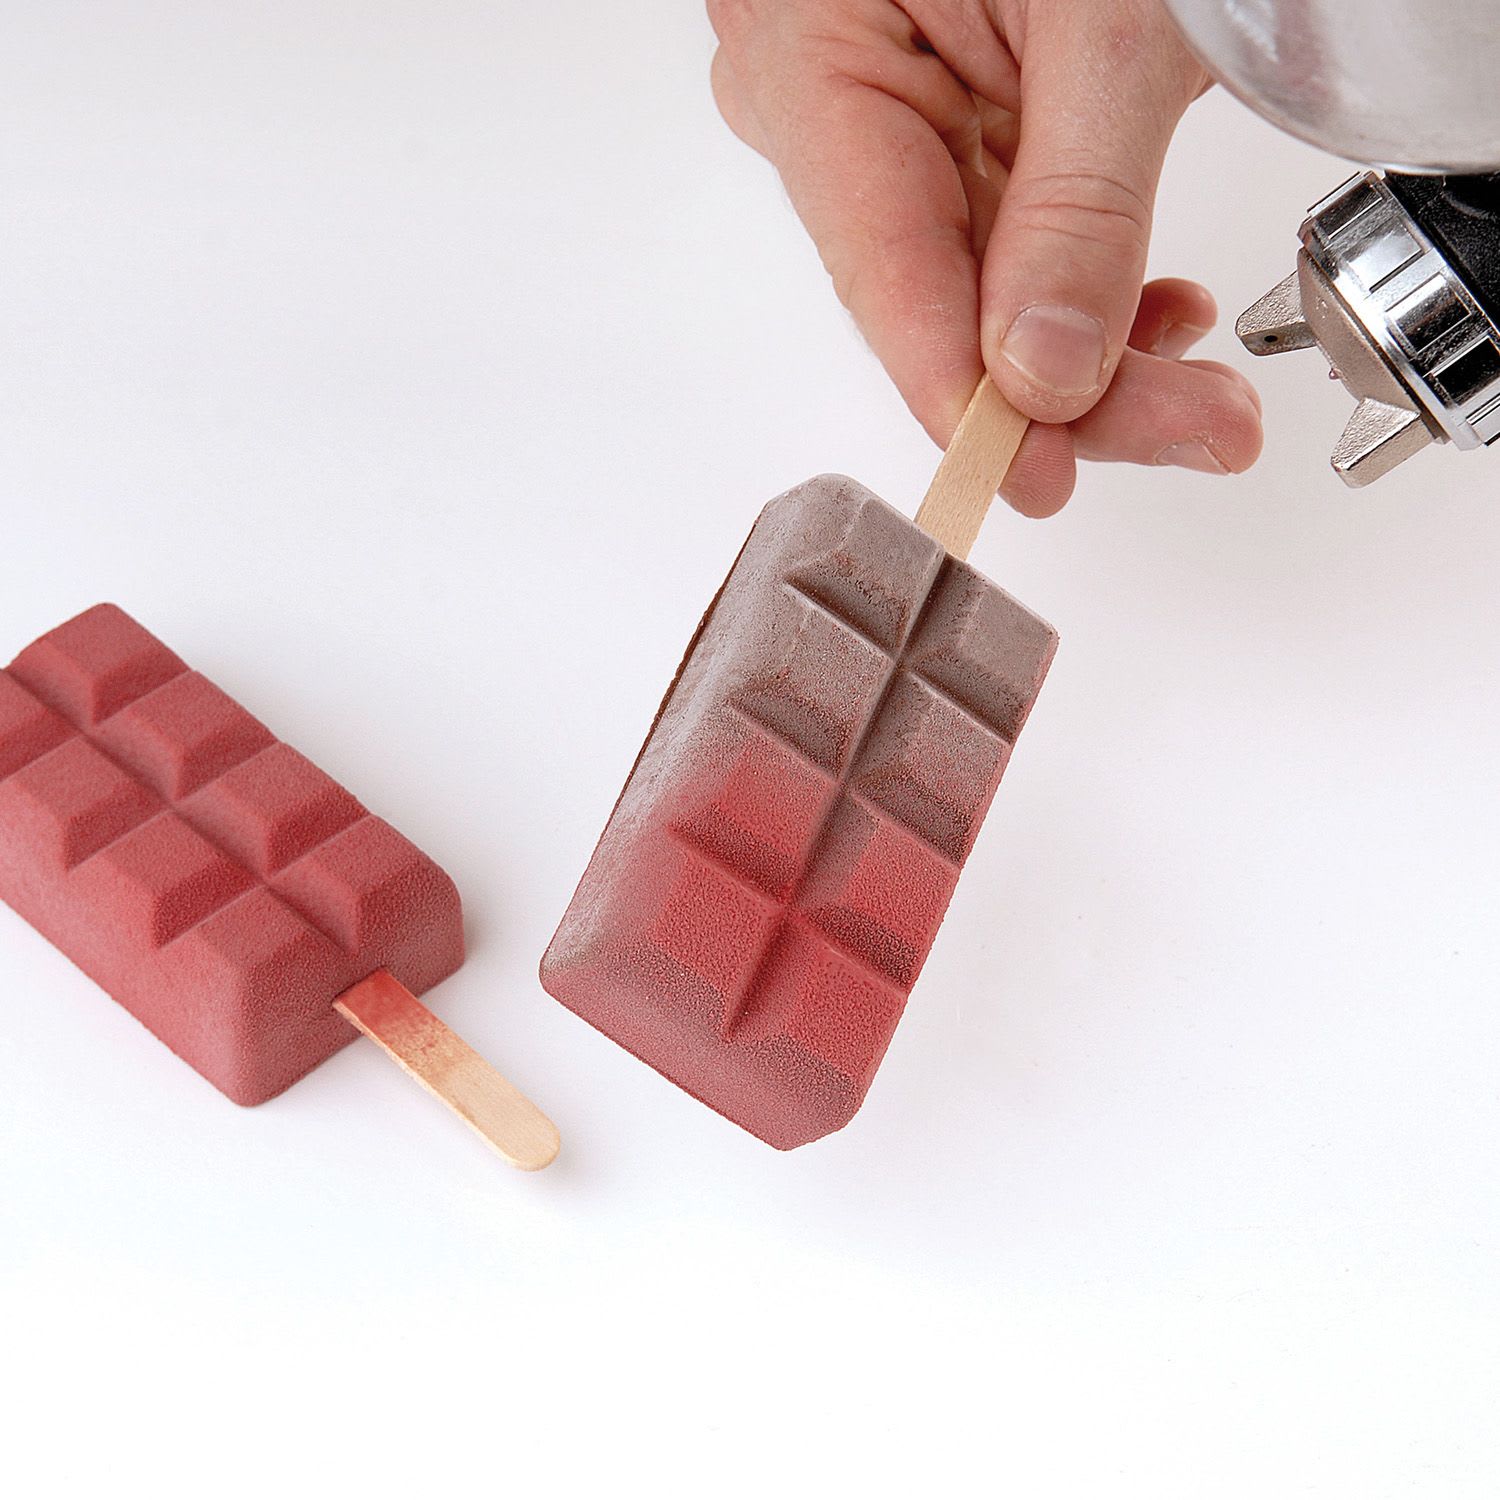 2pcs 15-slot Heart-shaped Chocolate Molds, Silicone Valentine's